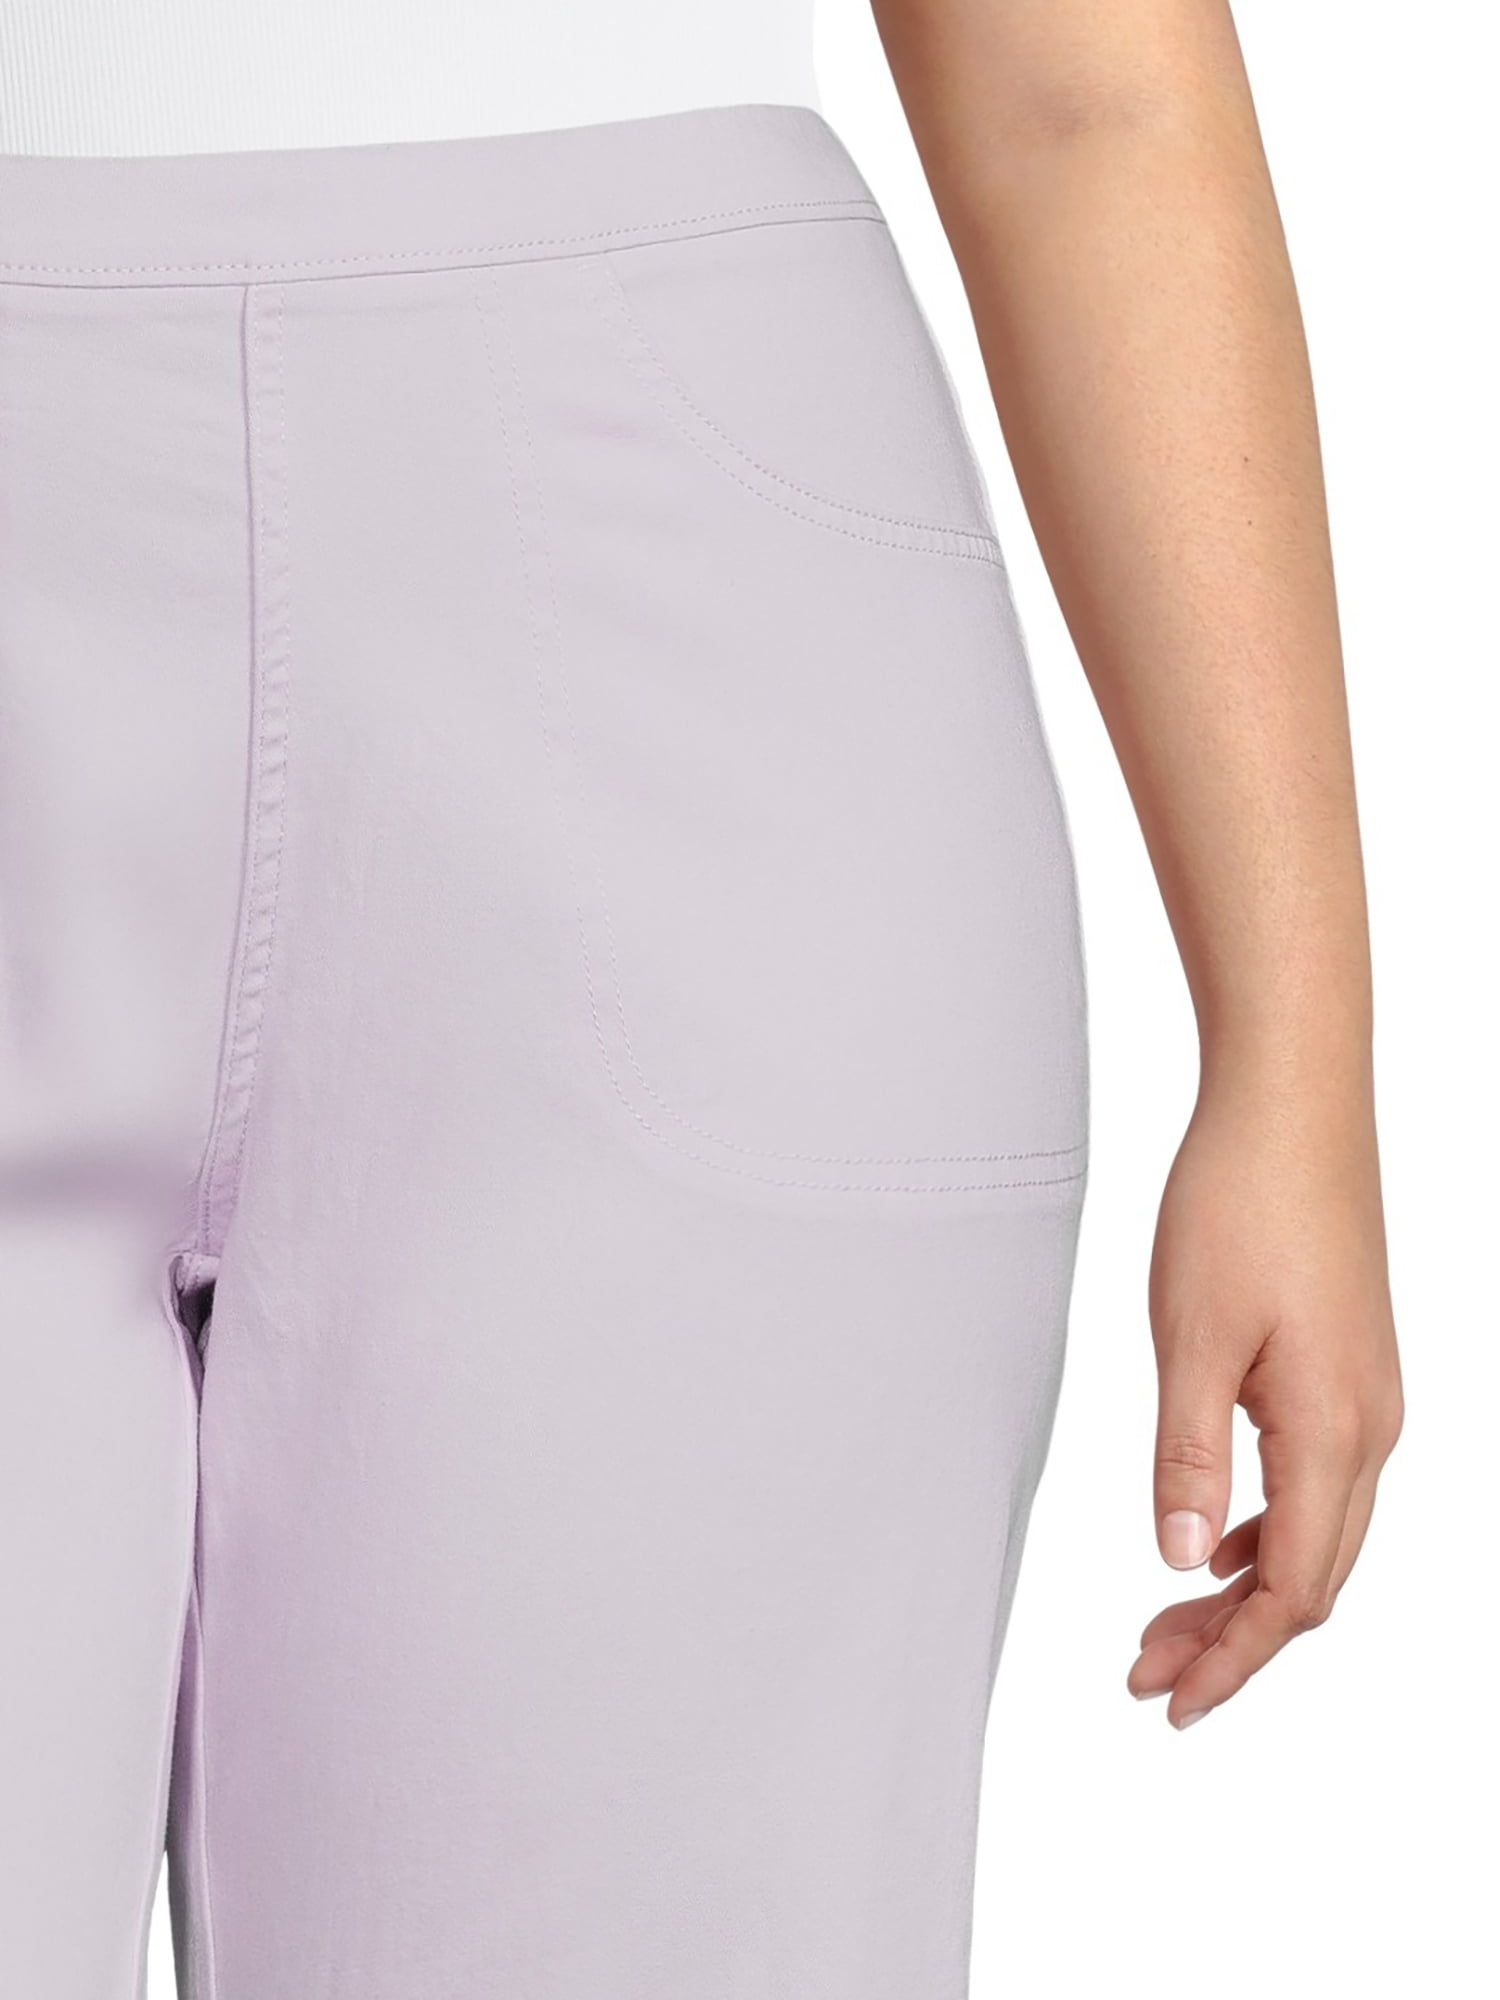 Just My Size Women's Plus Size Pull On 2 Pocket Stretch Capri Pants